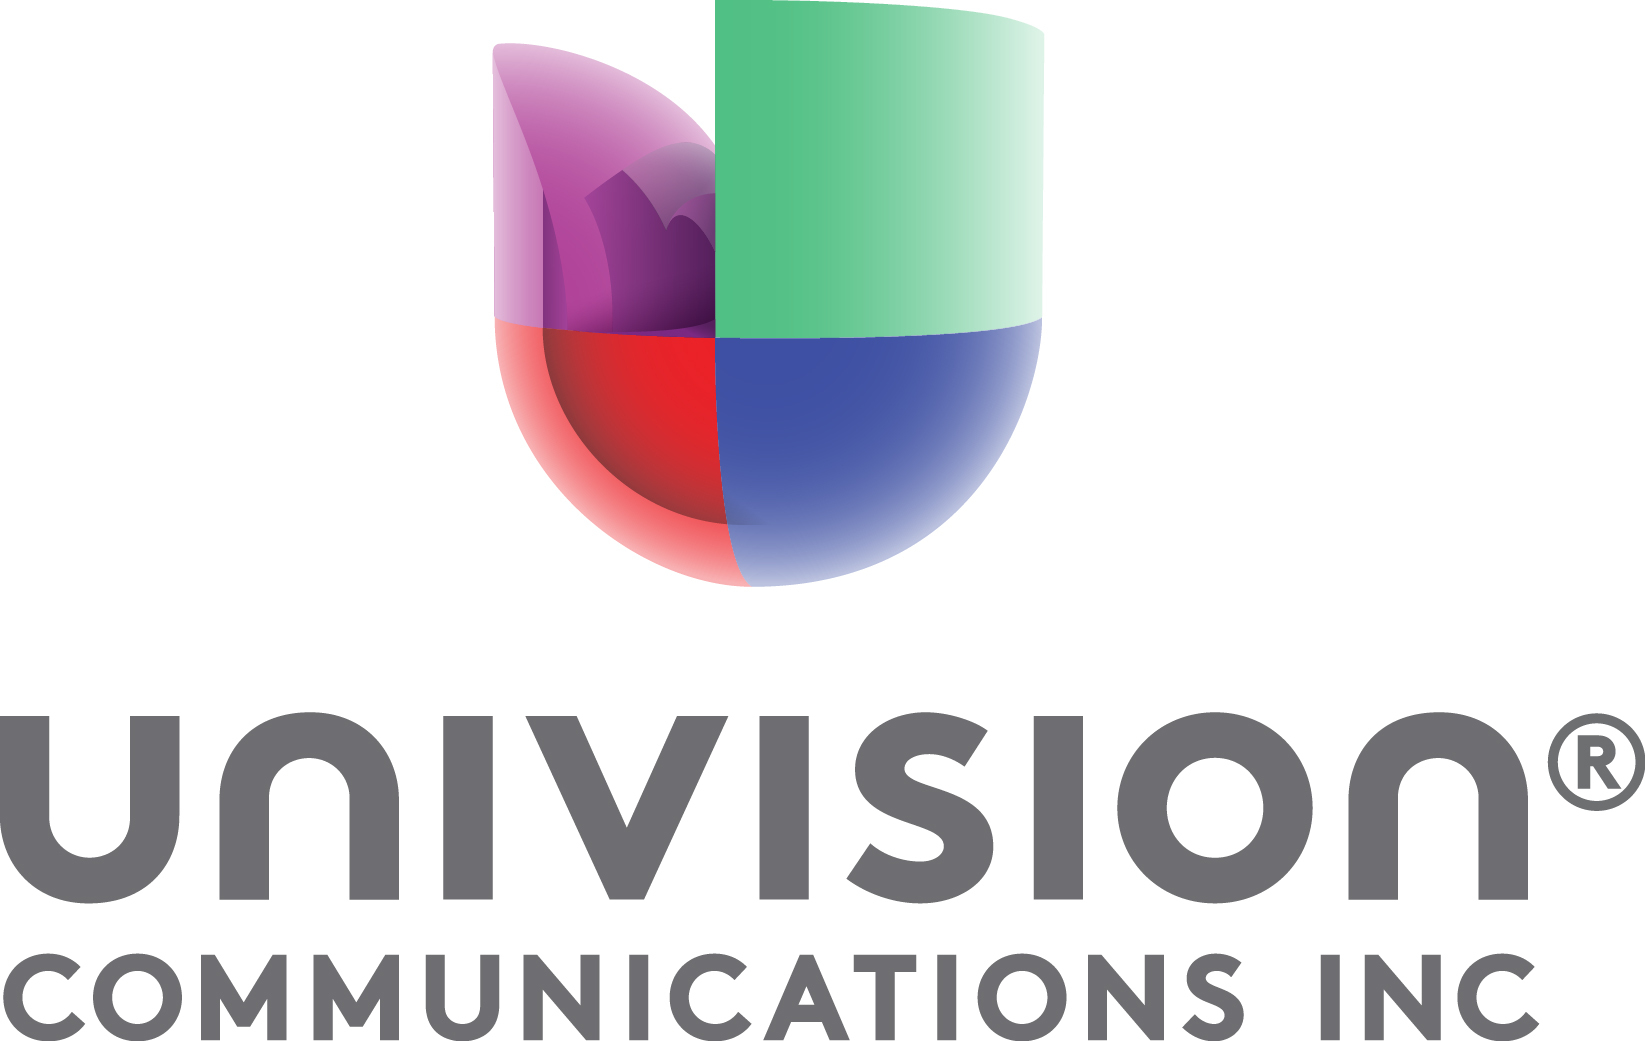 Univision - Device Registration